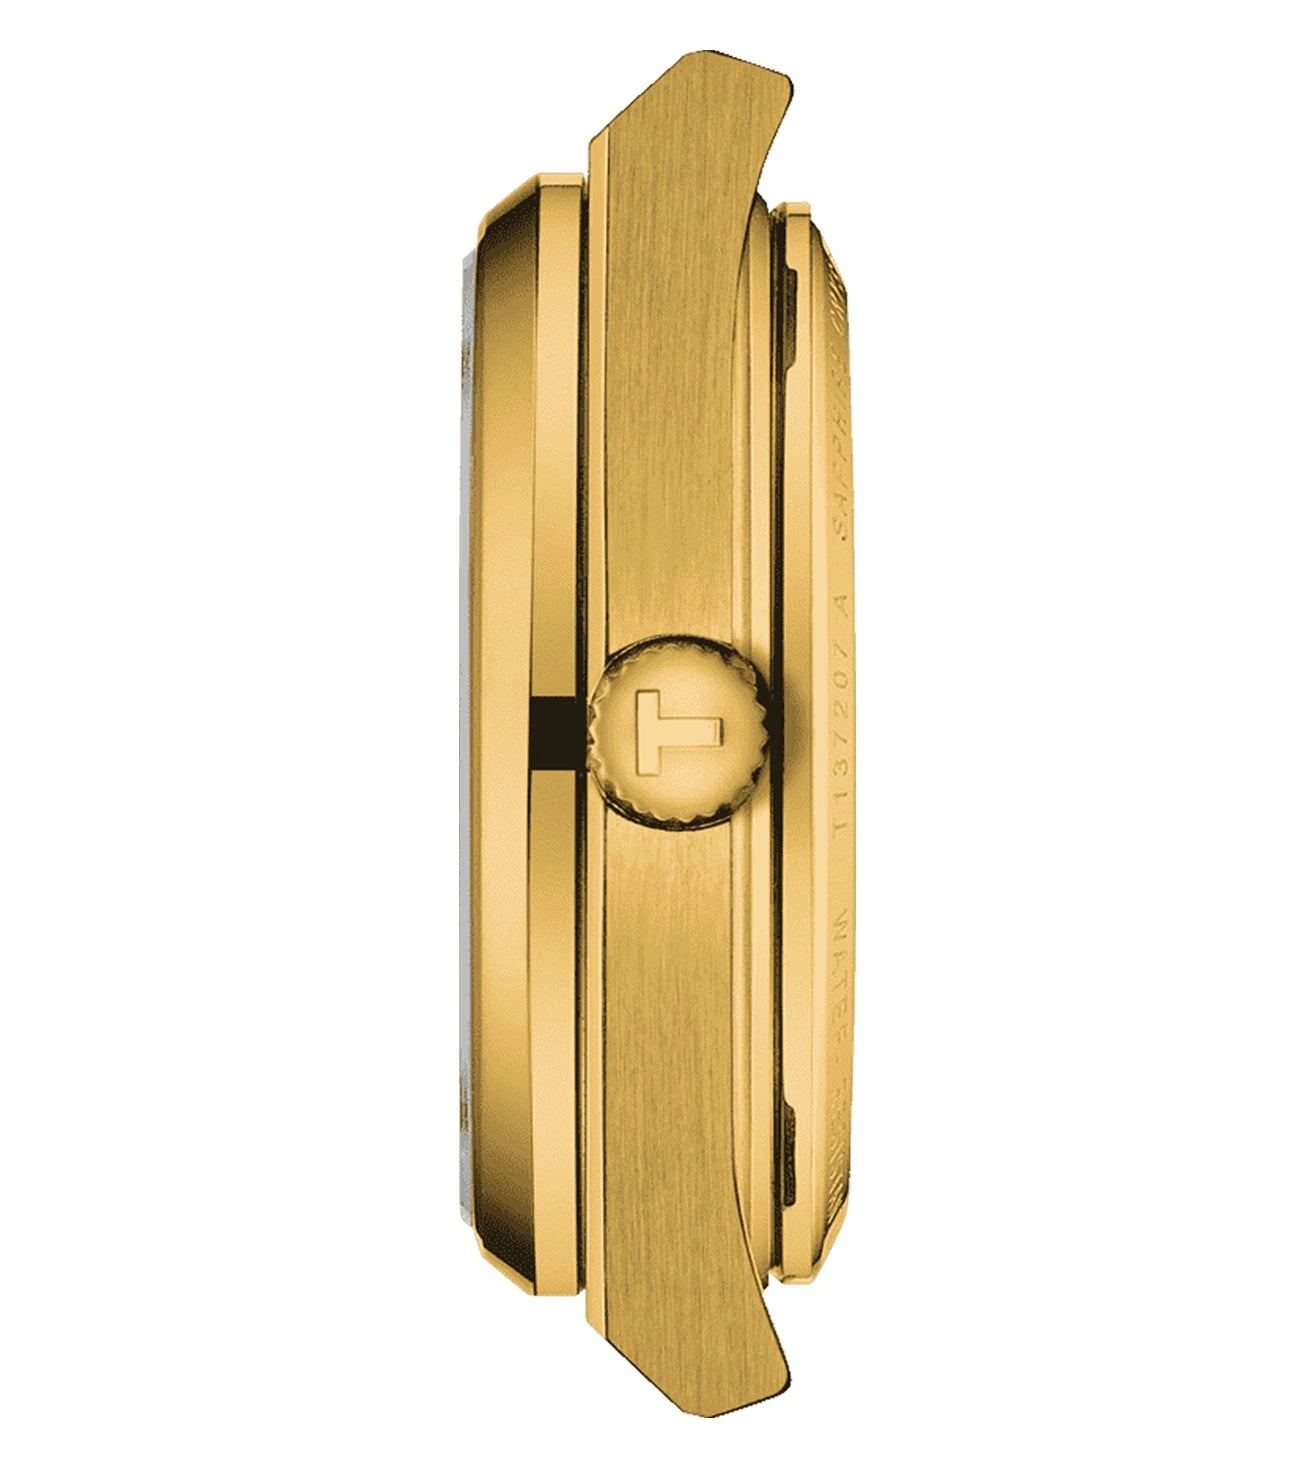 T1372073302100  |  Tissot Unisex T-Classic Automatic Unisex Watch